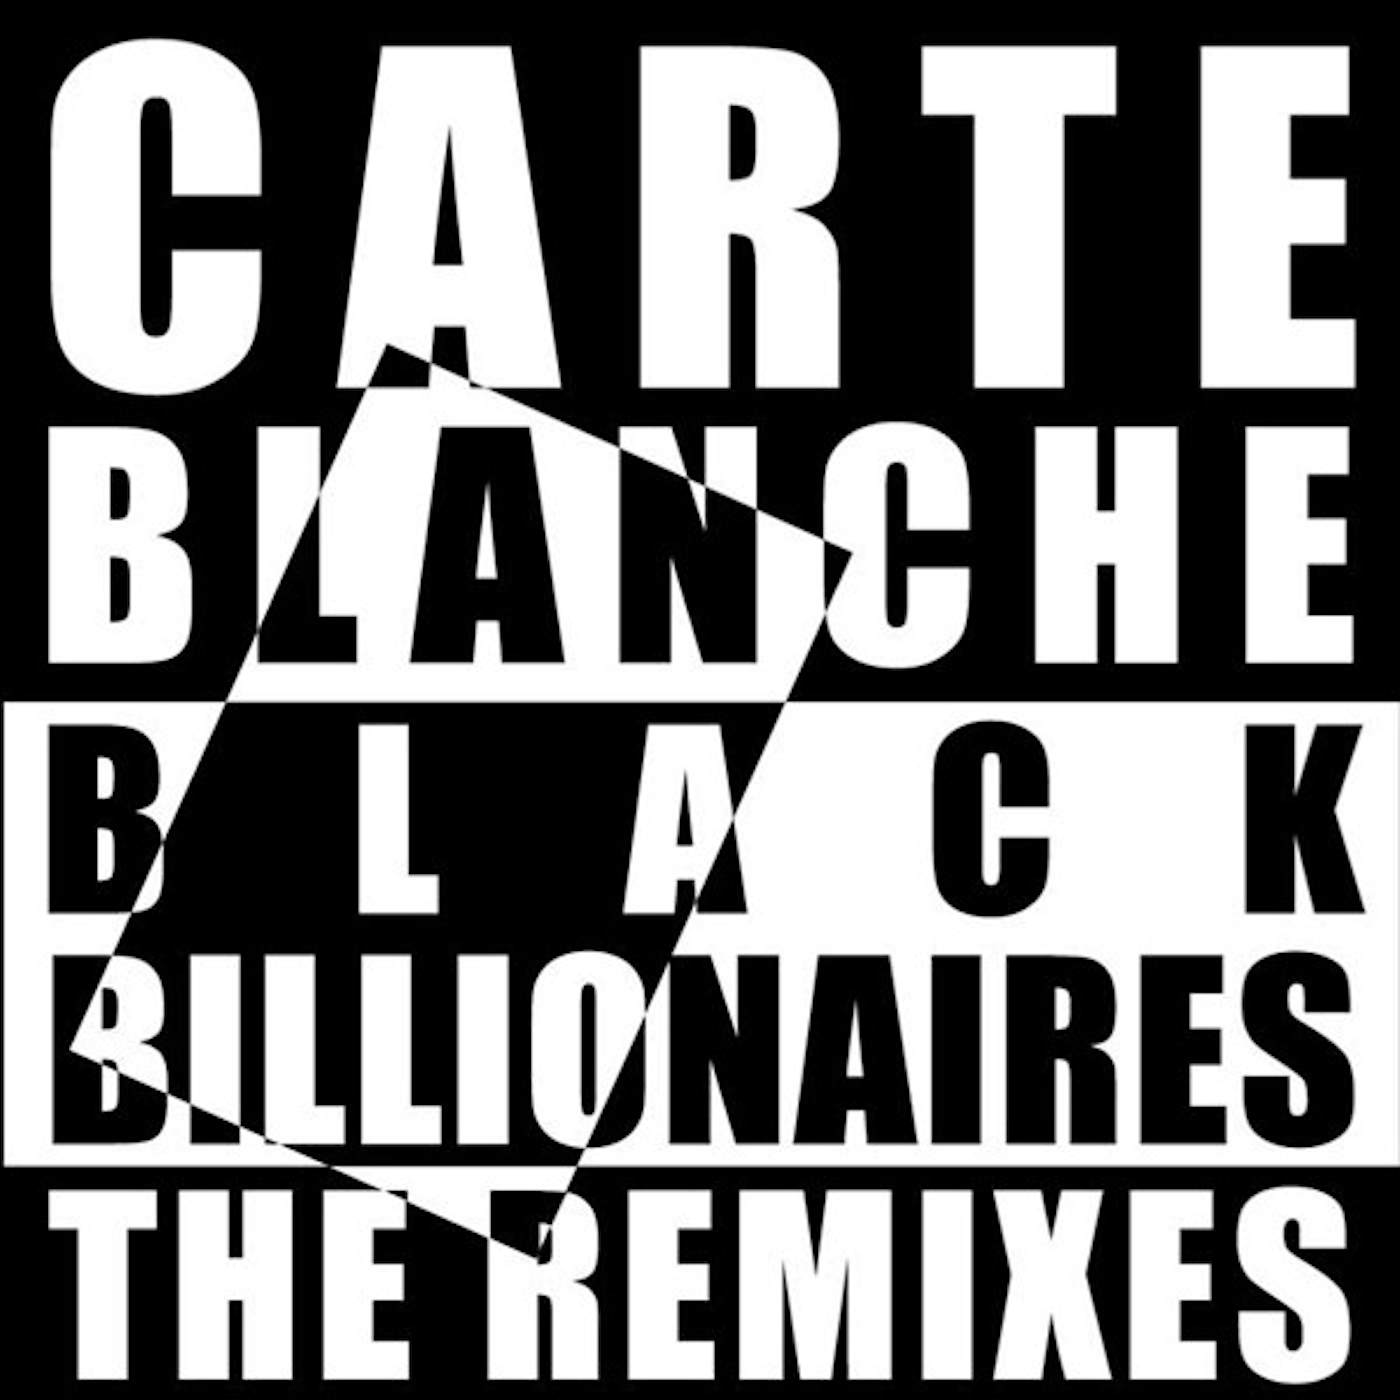 Carte Blanche Black Billionaires: The Remixes Vinyl Record